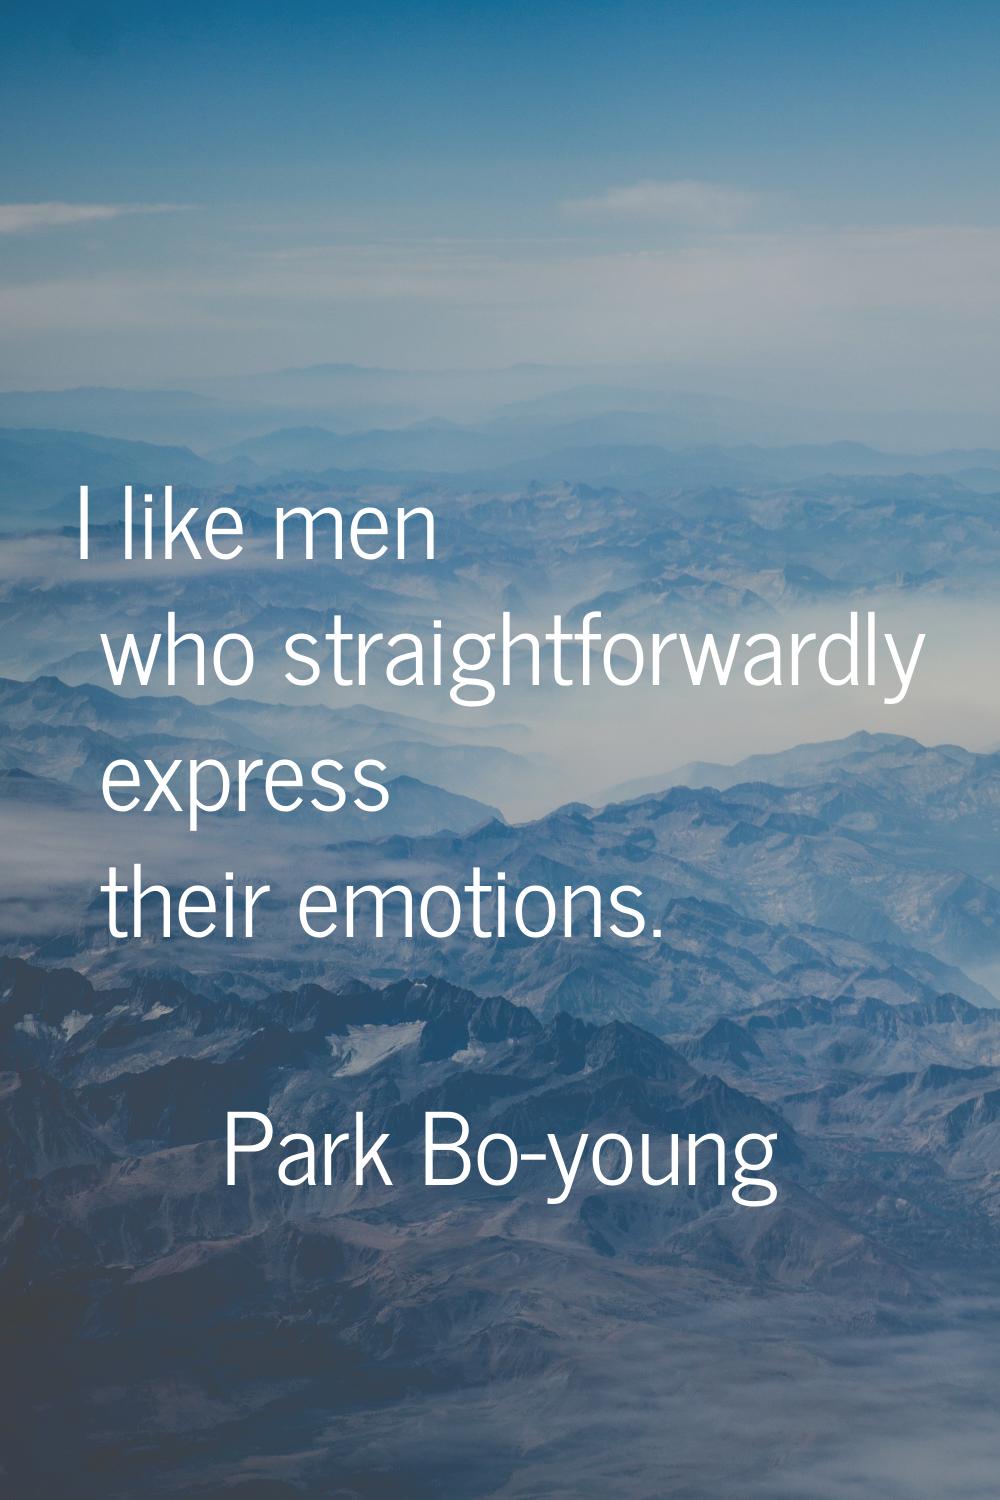 I like men who straightforwardly express their emotions.